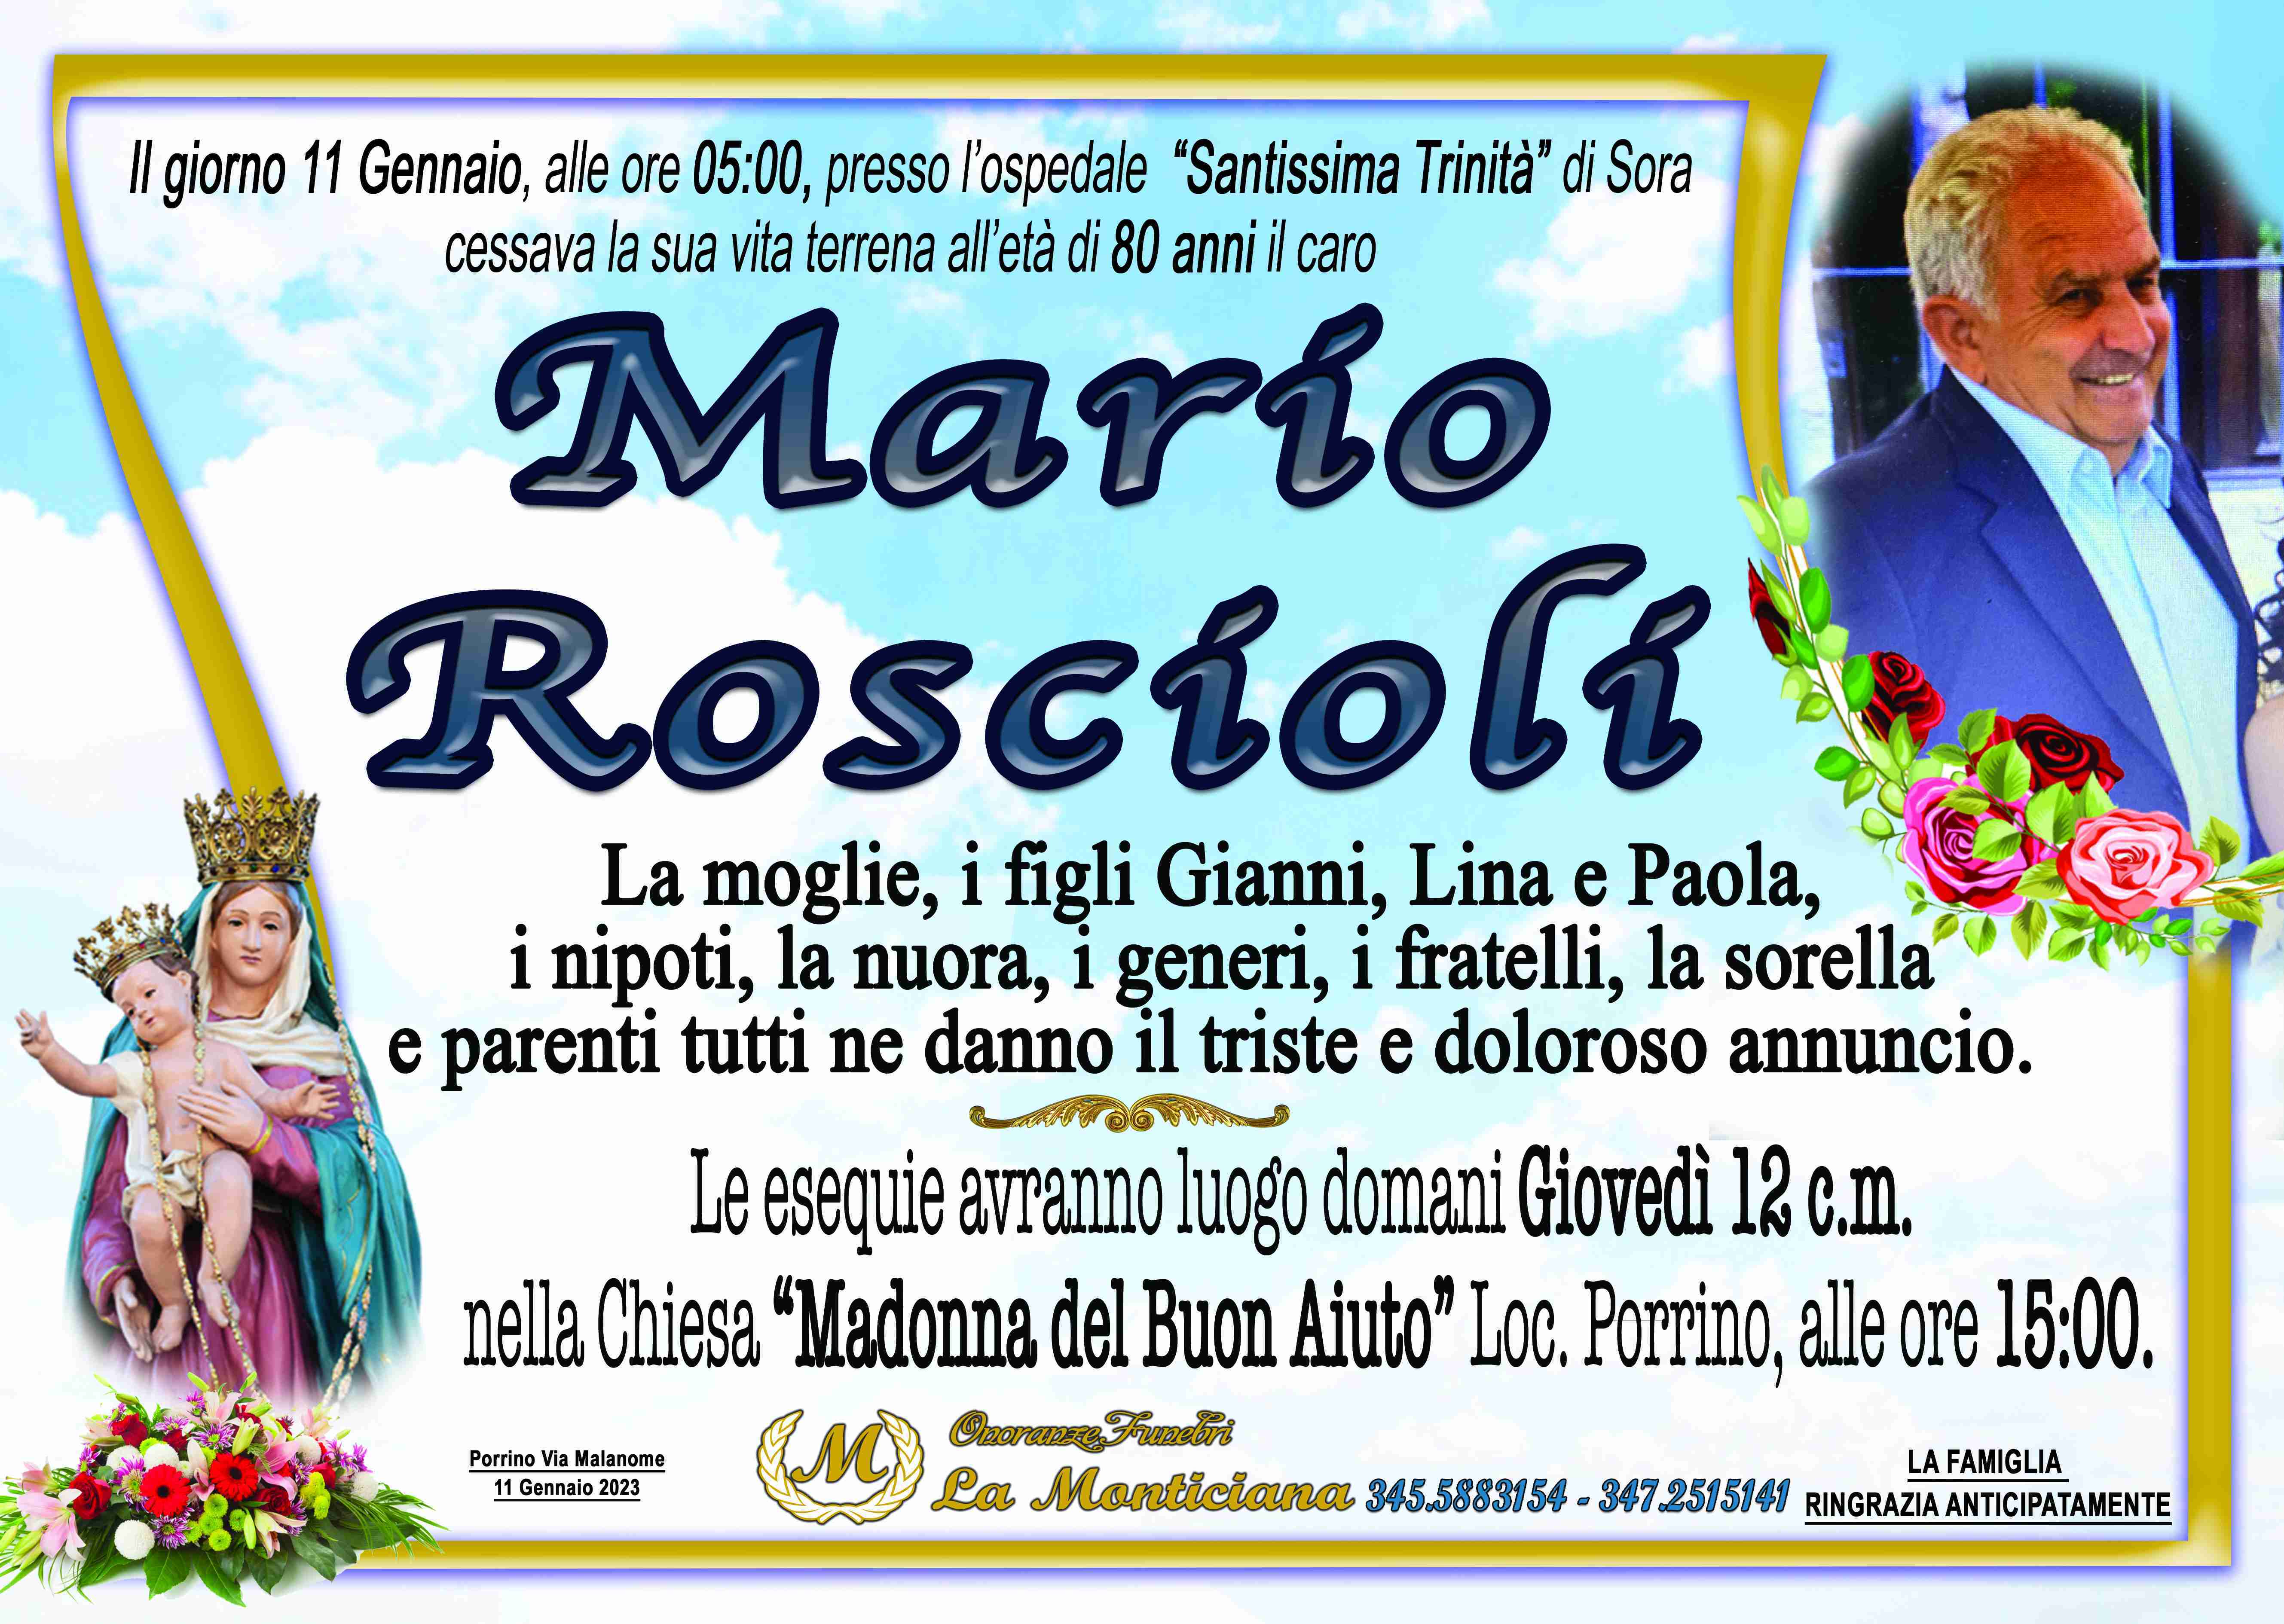 Mario Roscioli